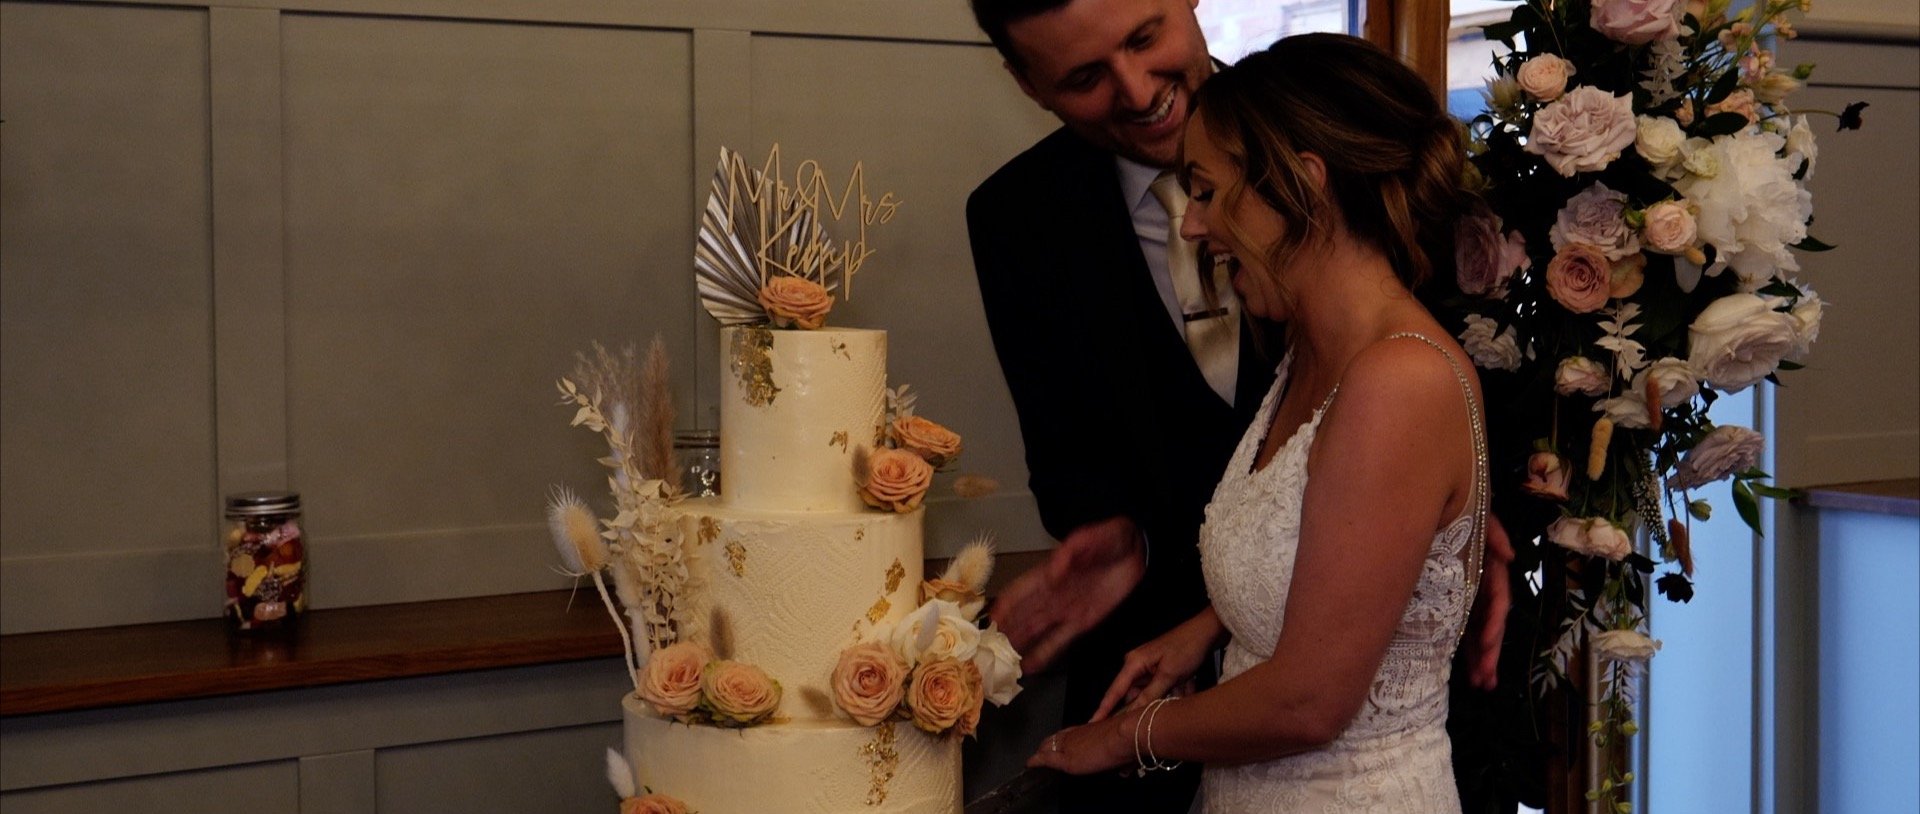 Cutting the cake wedding video - Essex - 3 Cheers Media.jpg